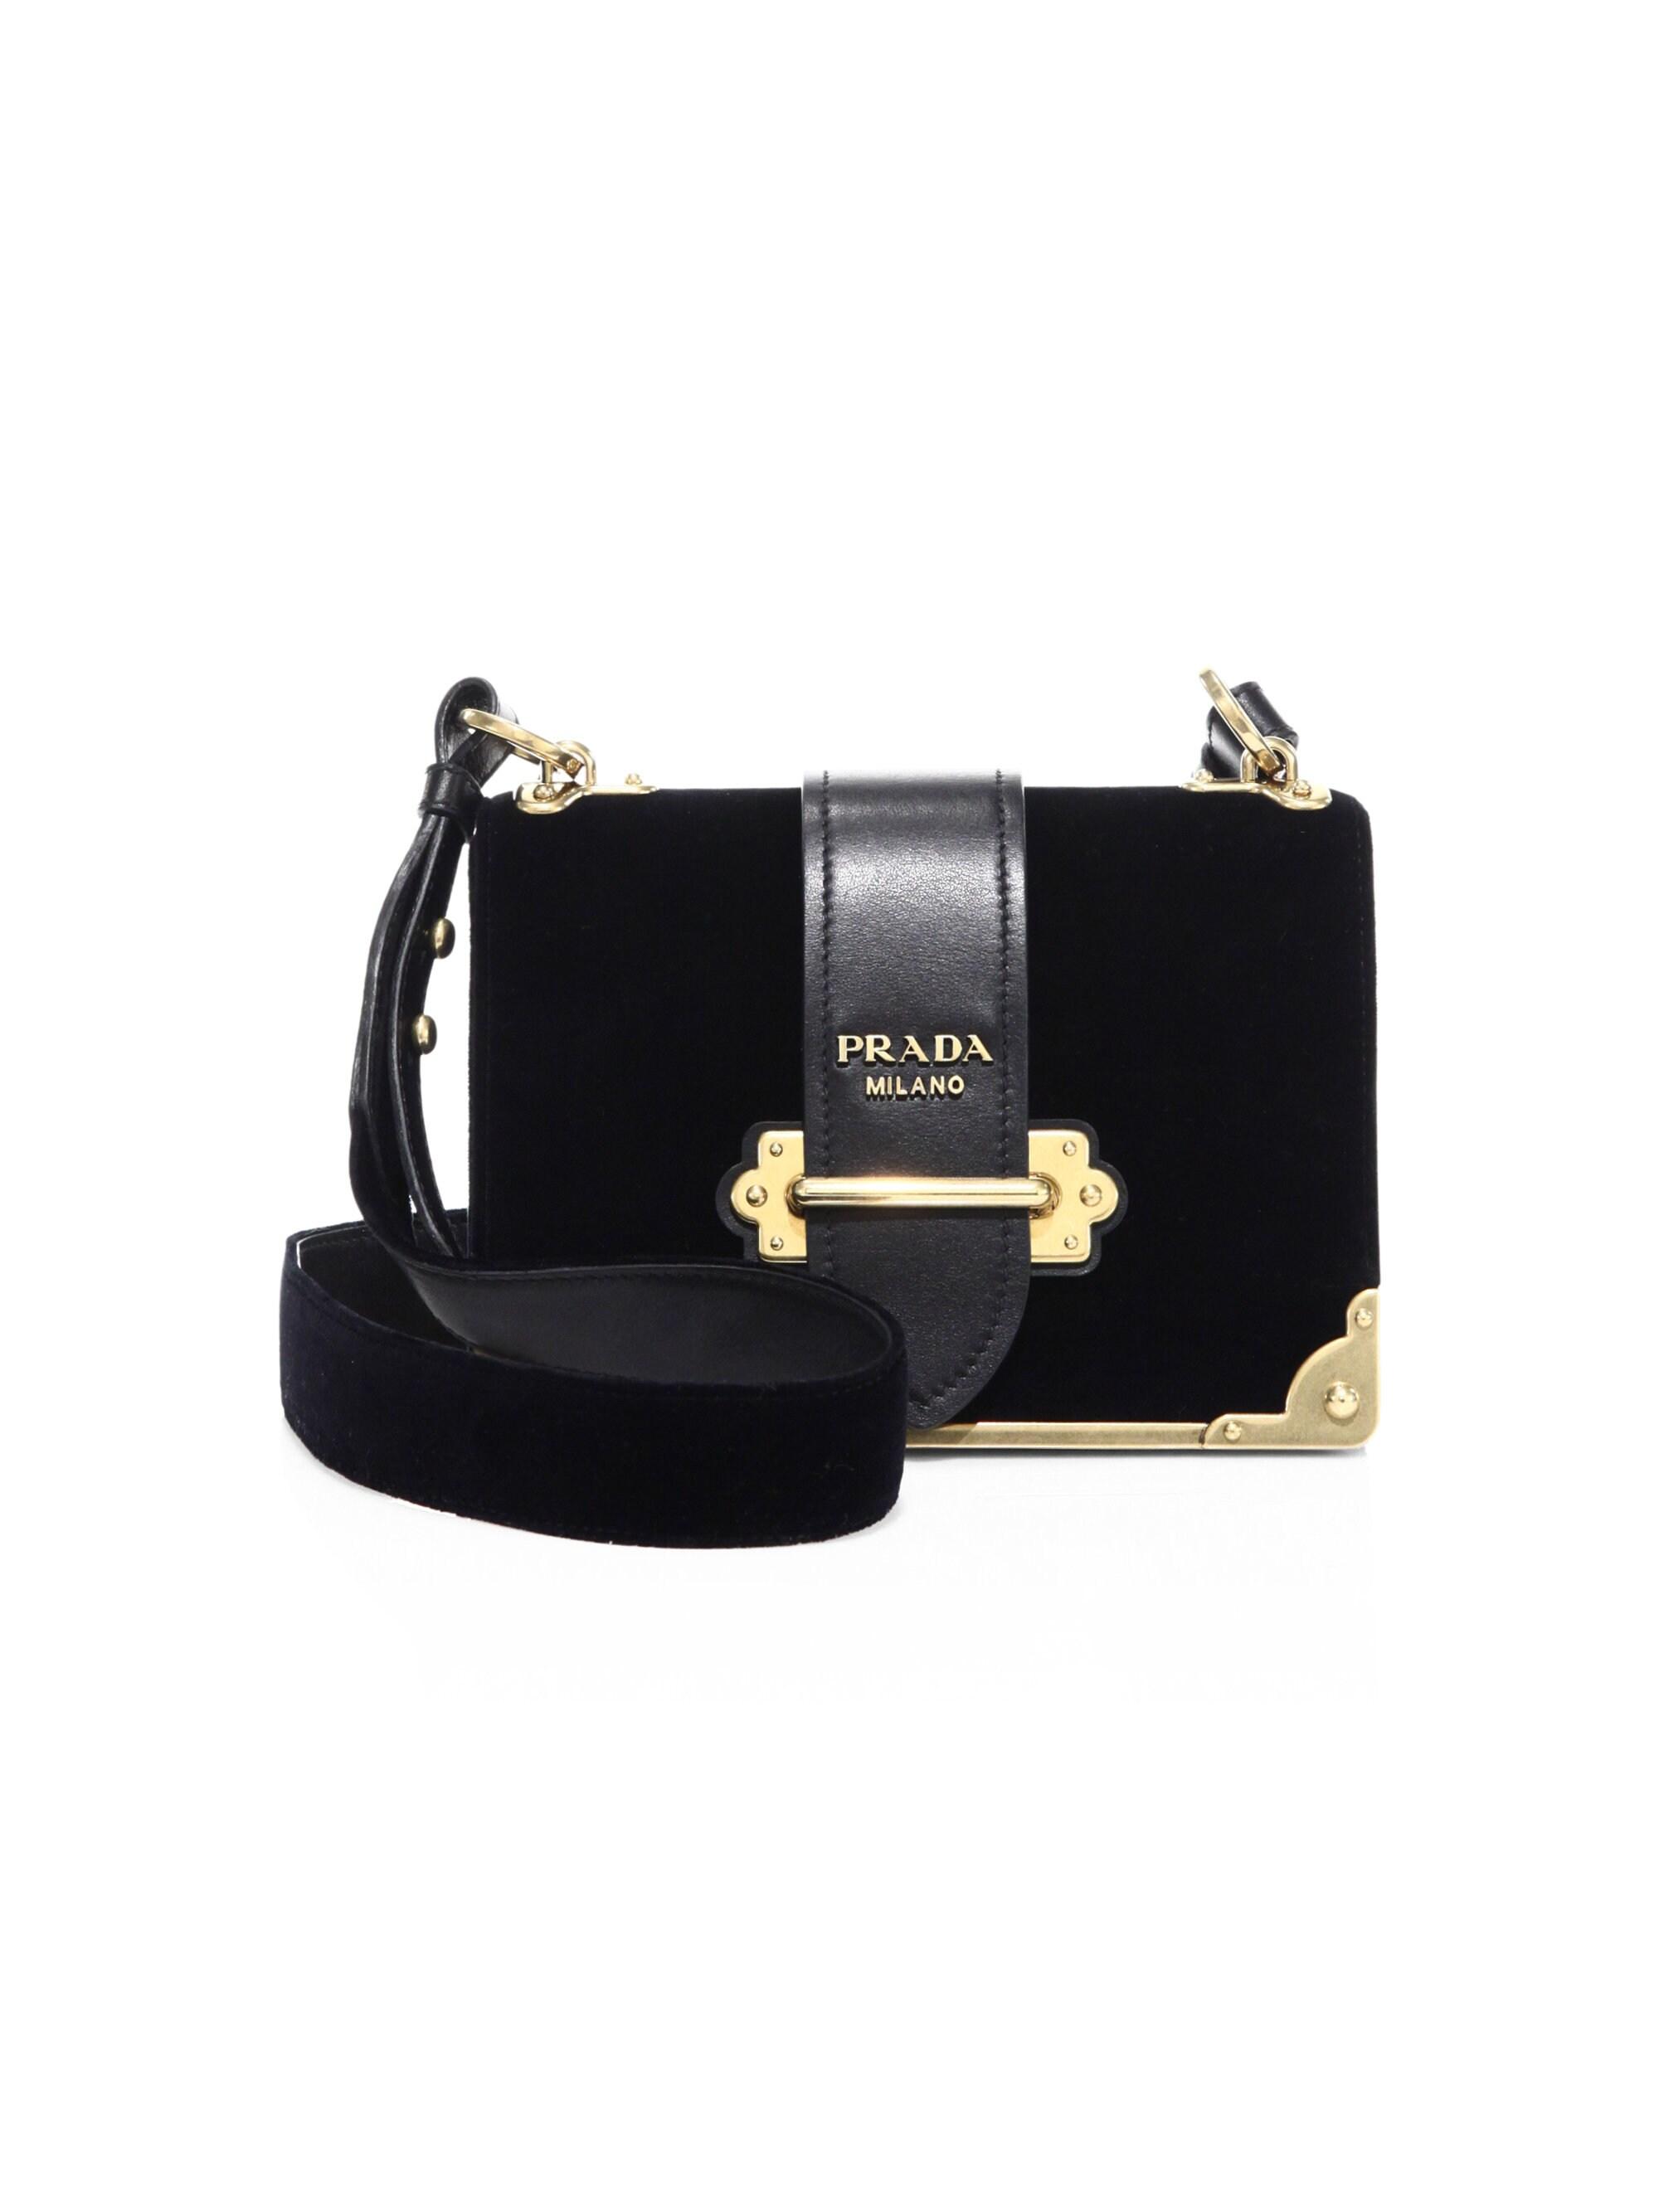 Prada Cahier Velvet & Leather Shoulder Bag in Black | Lyst